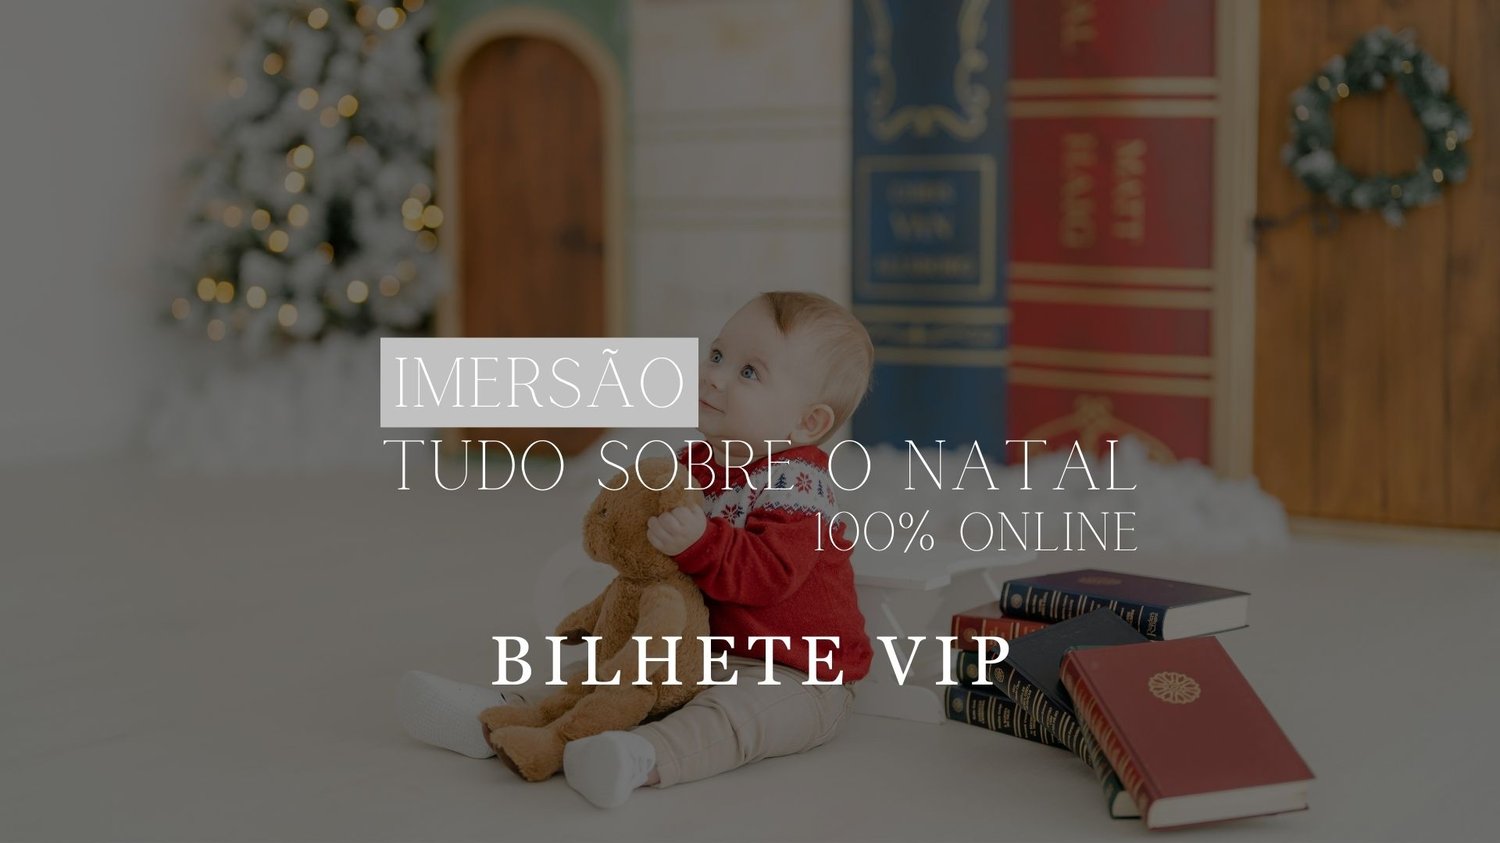 Image of IMERSÃO - TUDO SOBRE O NATAL - BILHETE VIP